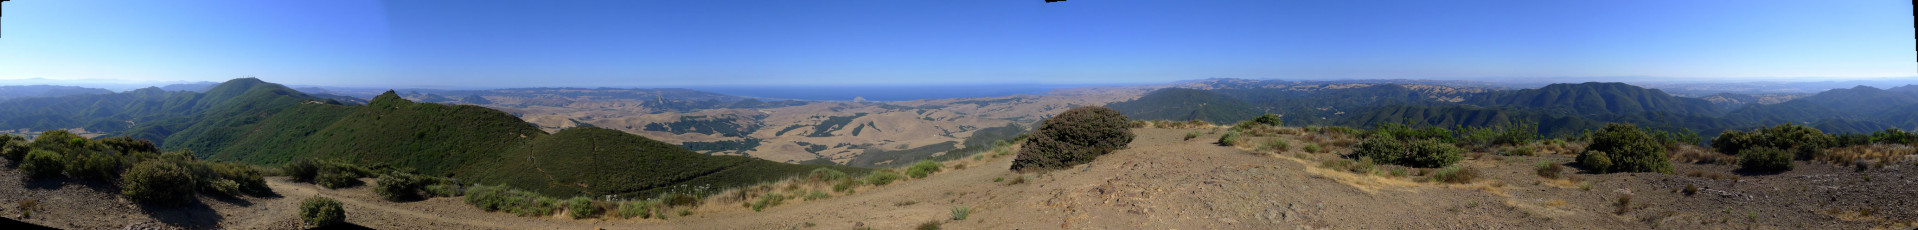 CerroAlto_Panorama1